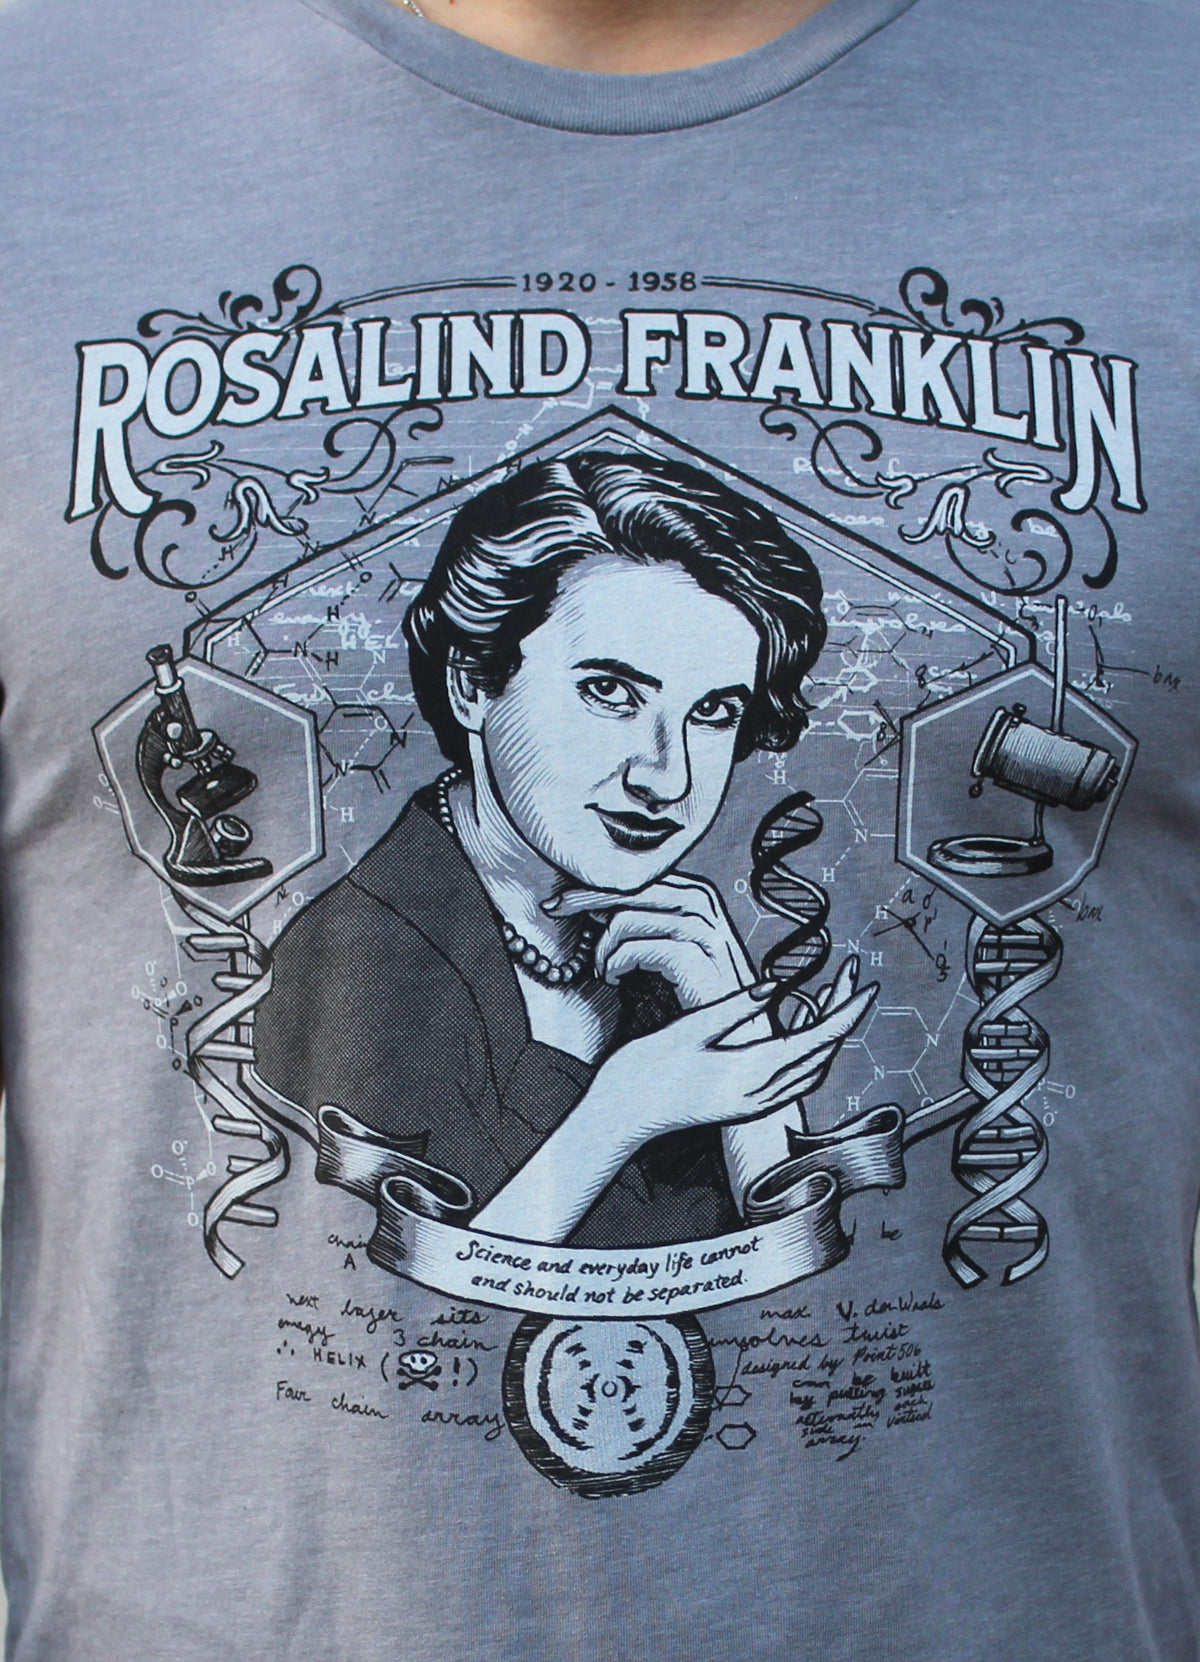 Rosalind Franklin - Point 506